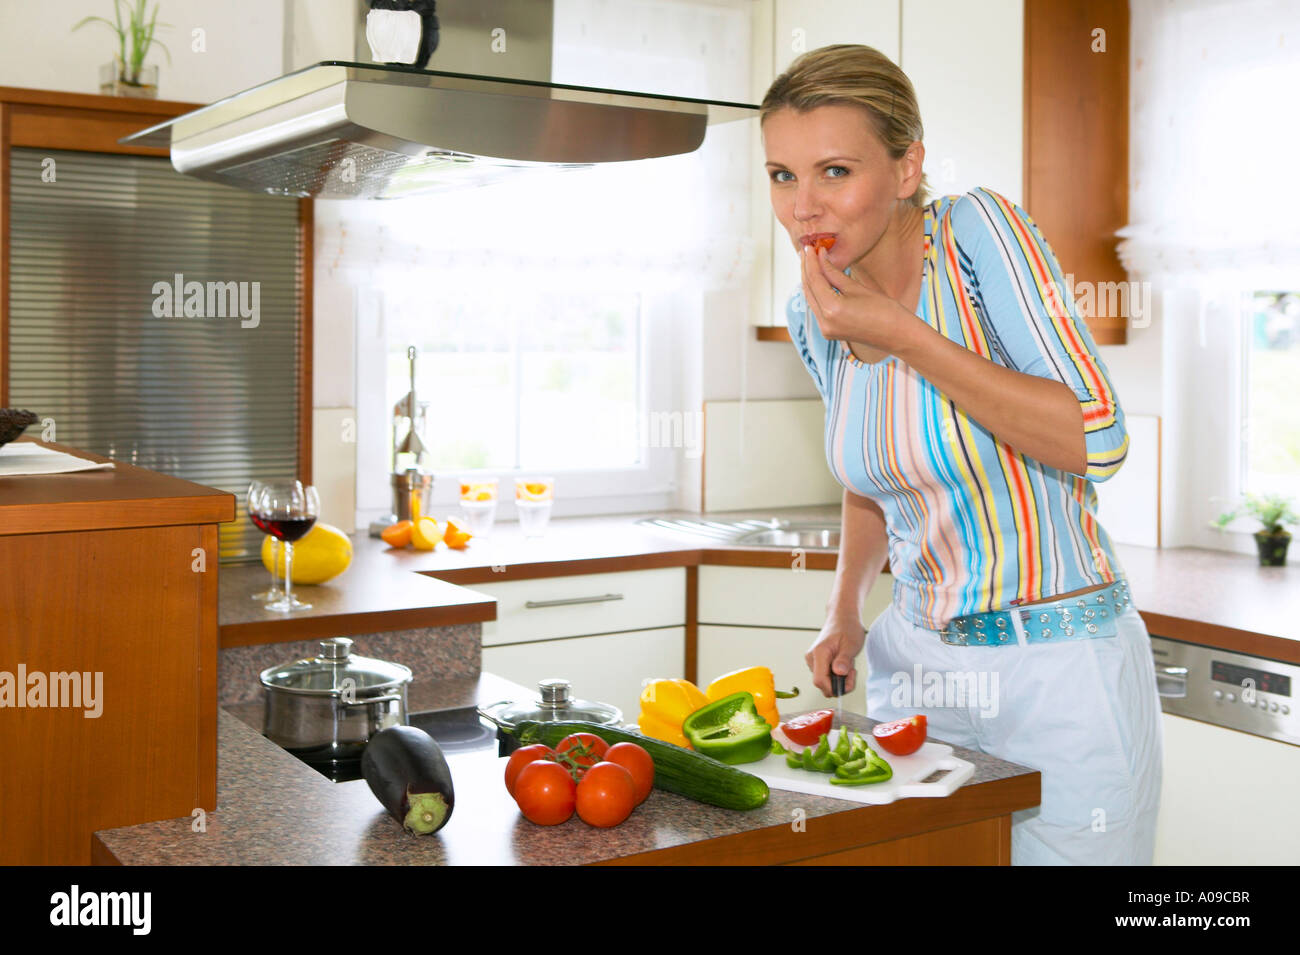 Frau arbeitet in der Kueche, woman working in the kitchen Stock Photo